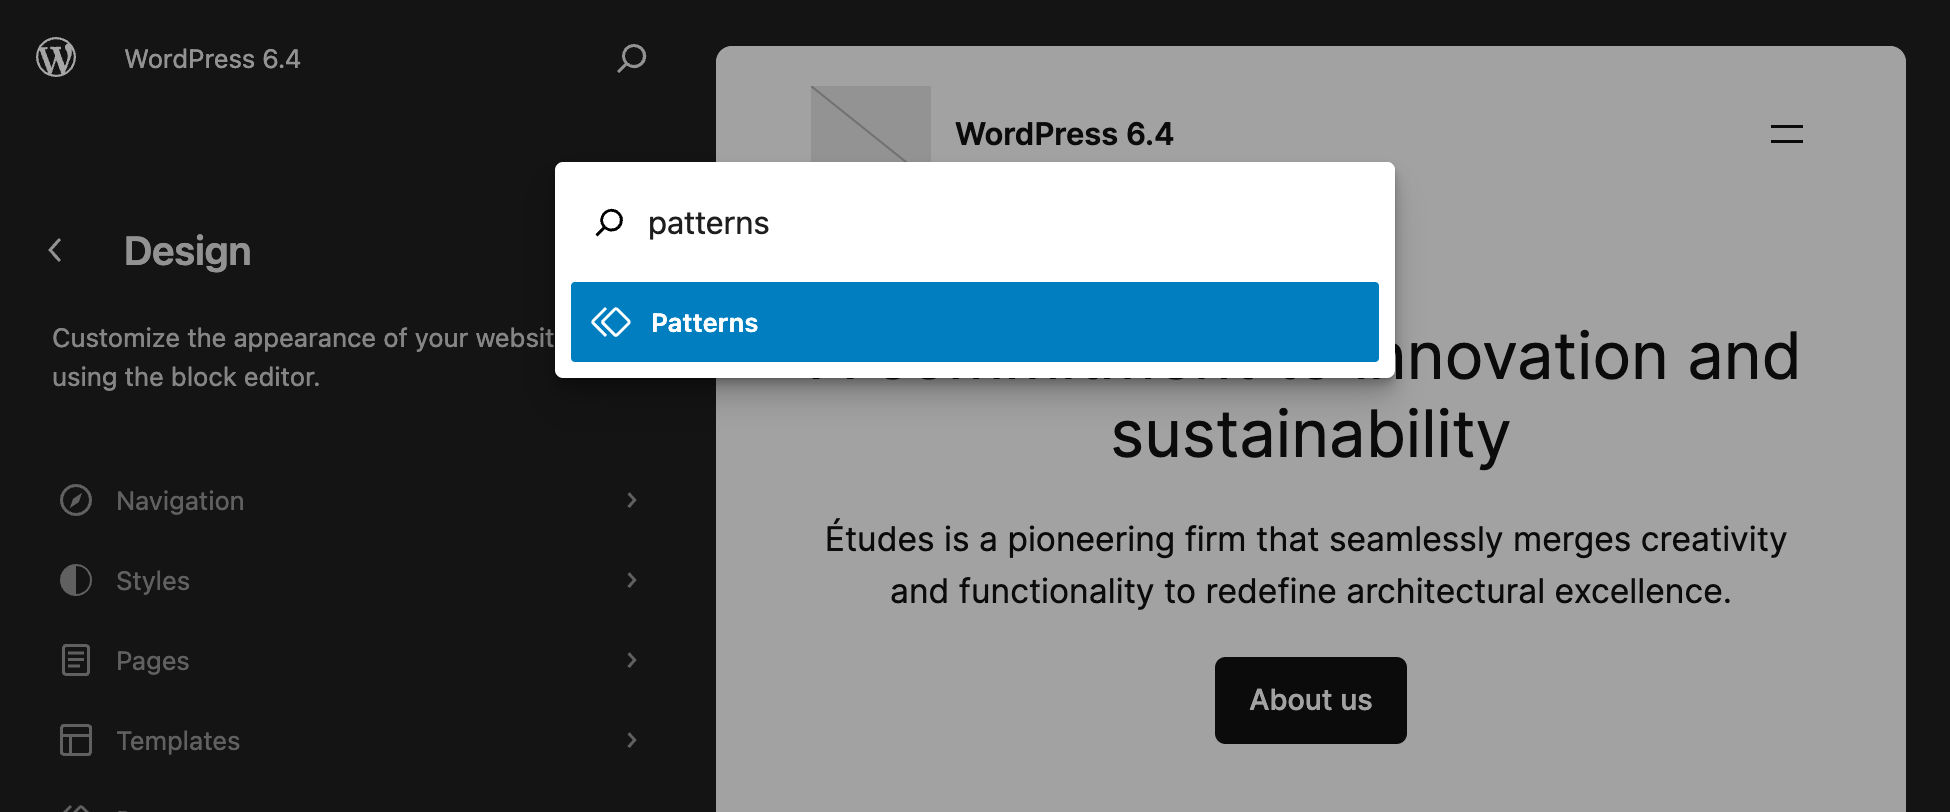 Ricerca dei pattern in WordPress 6.4